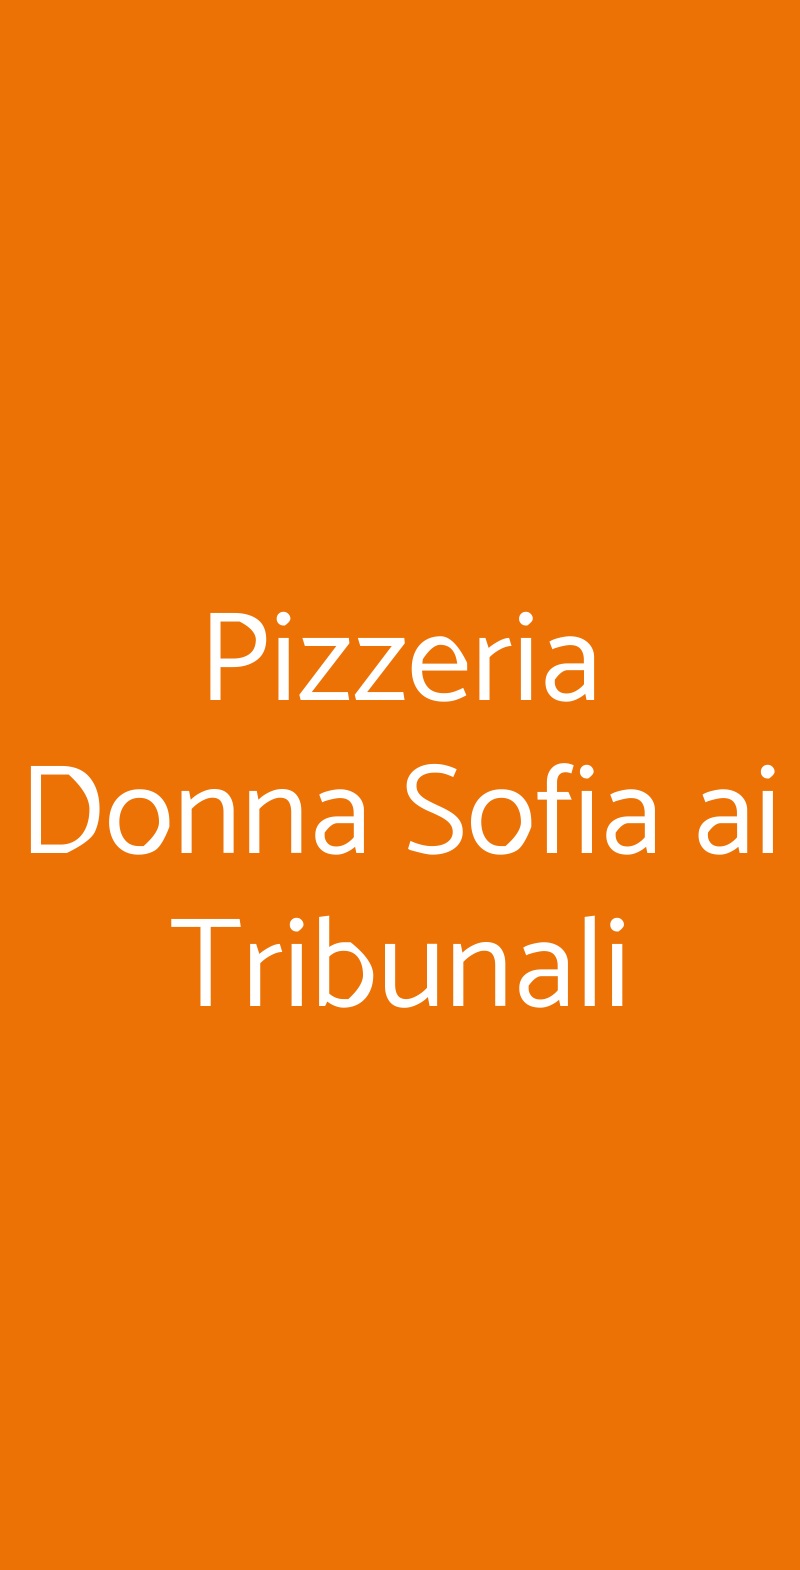 Pizzeria Donna Sofia ai Tribunali Napoli menù 1 pagina